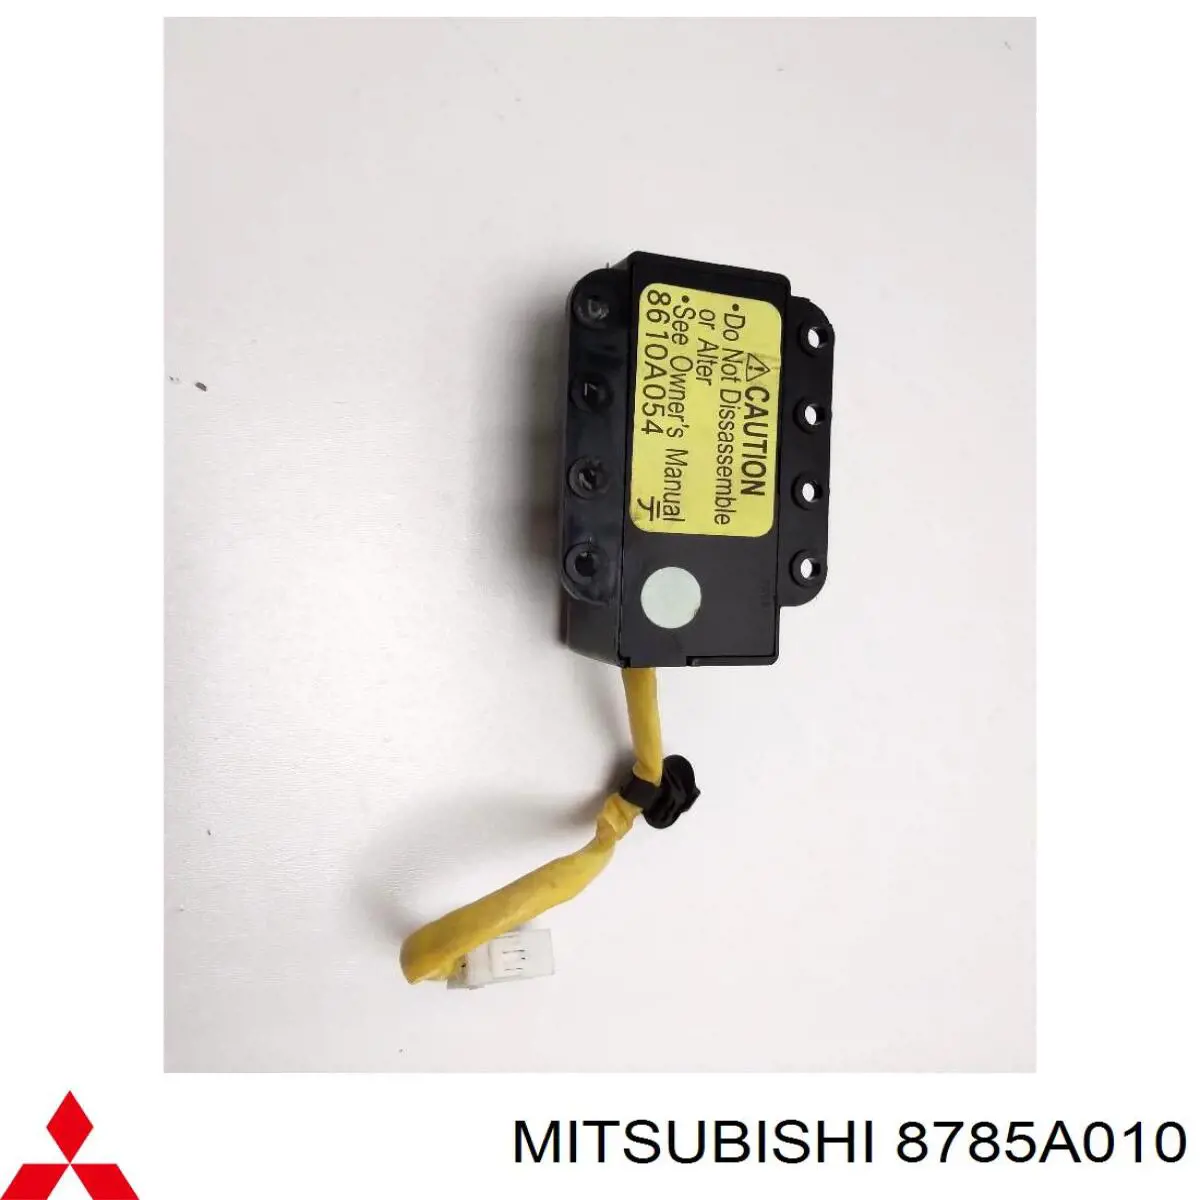 8785A010 Mitsubishi unidad de control bluetooth